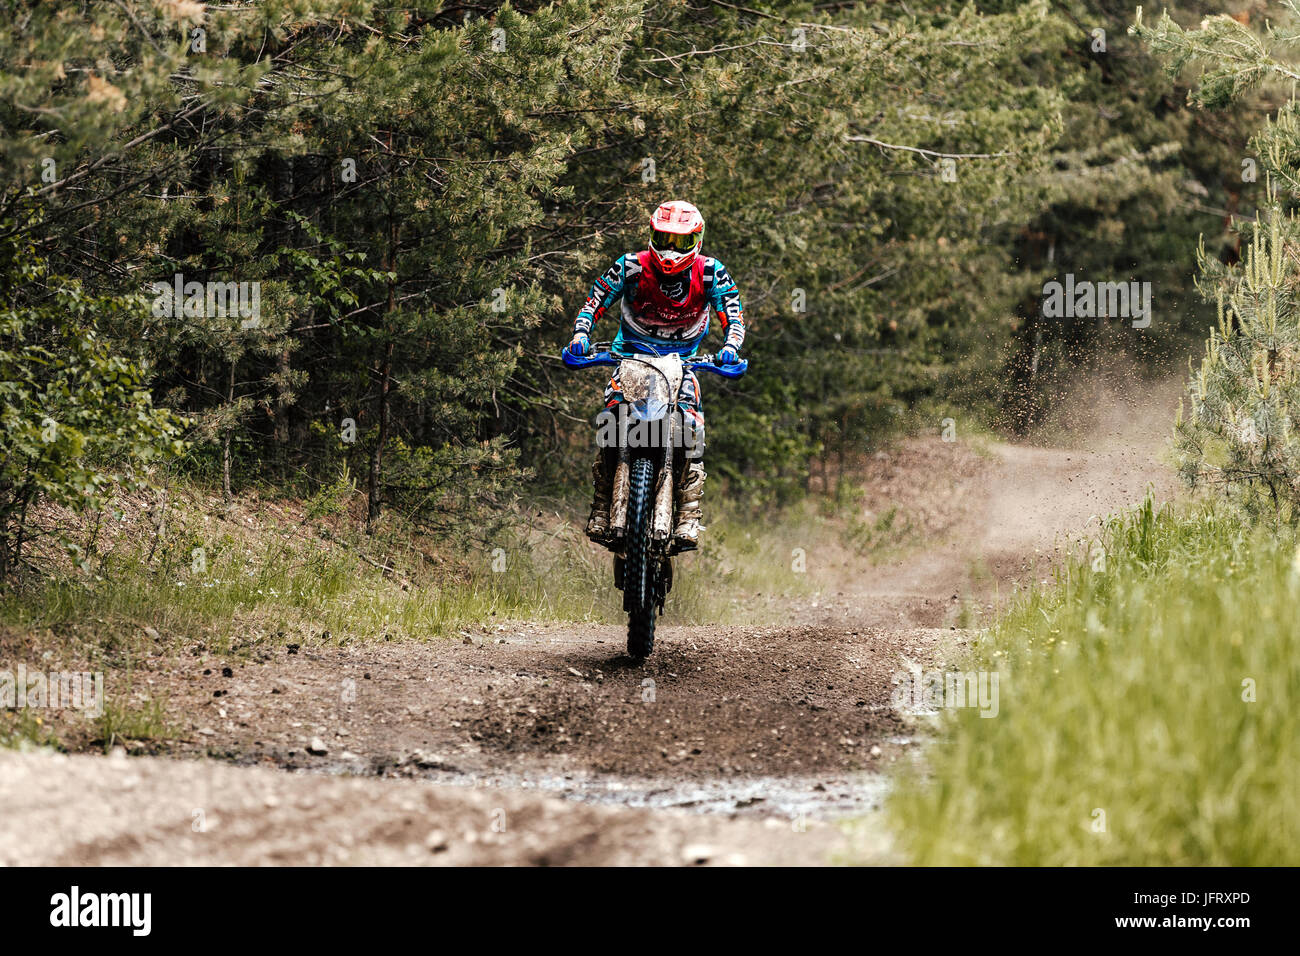 enduro athlete rides on rear wheel of motorcycle during Ural Cup in Enduro Stock Photo